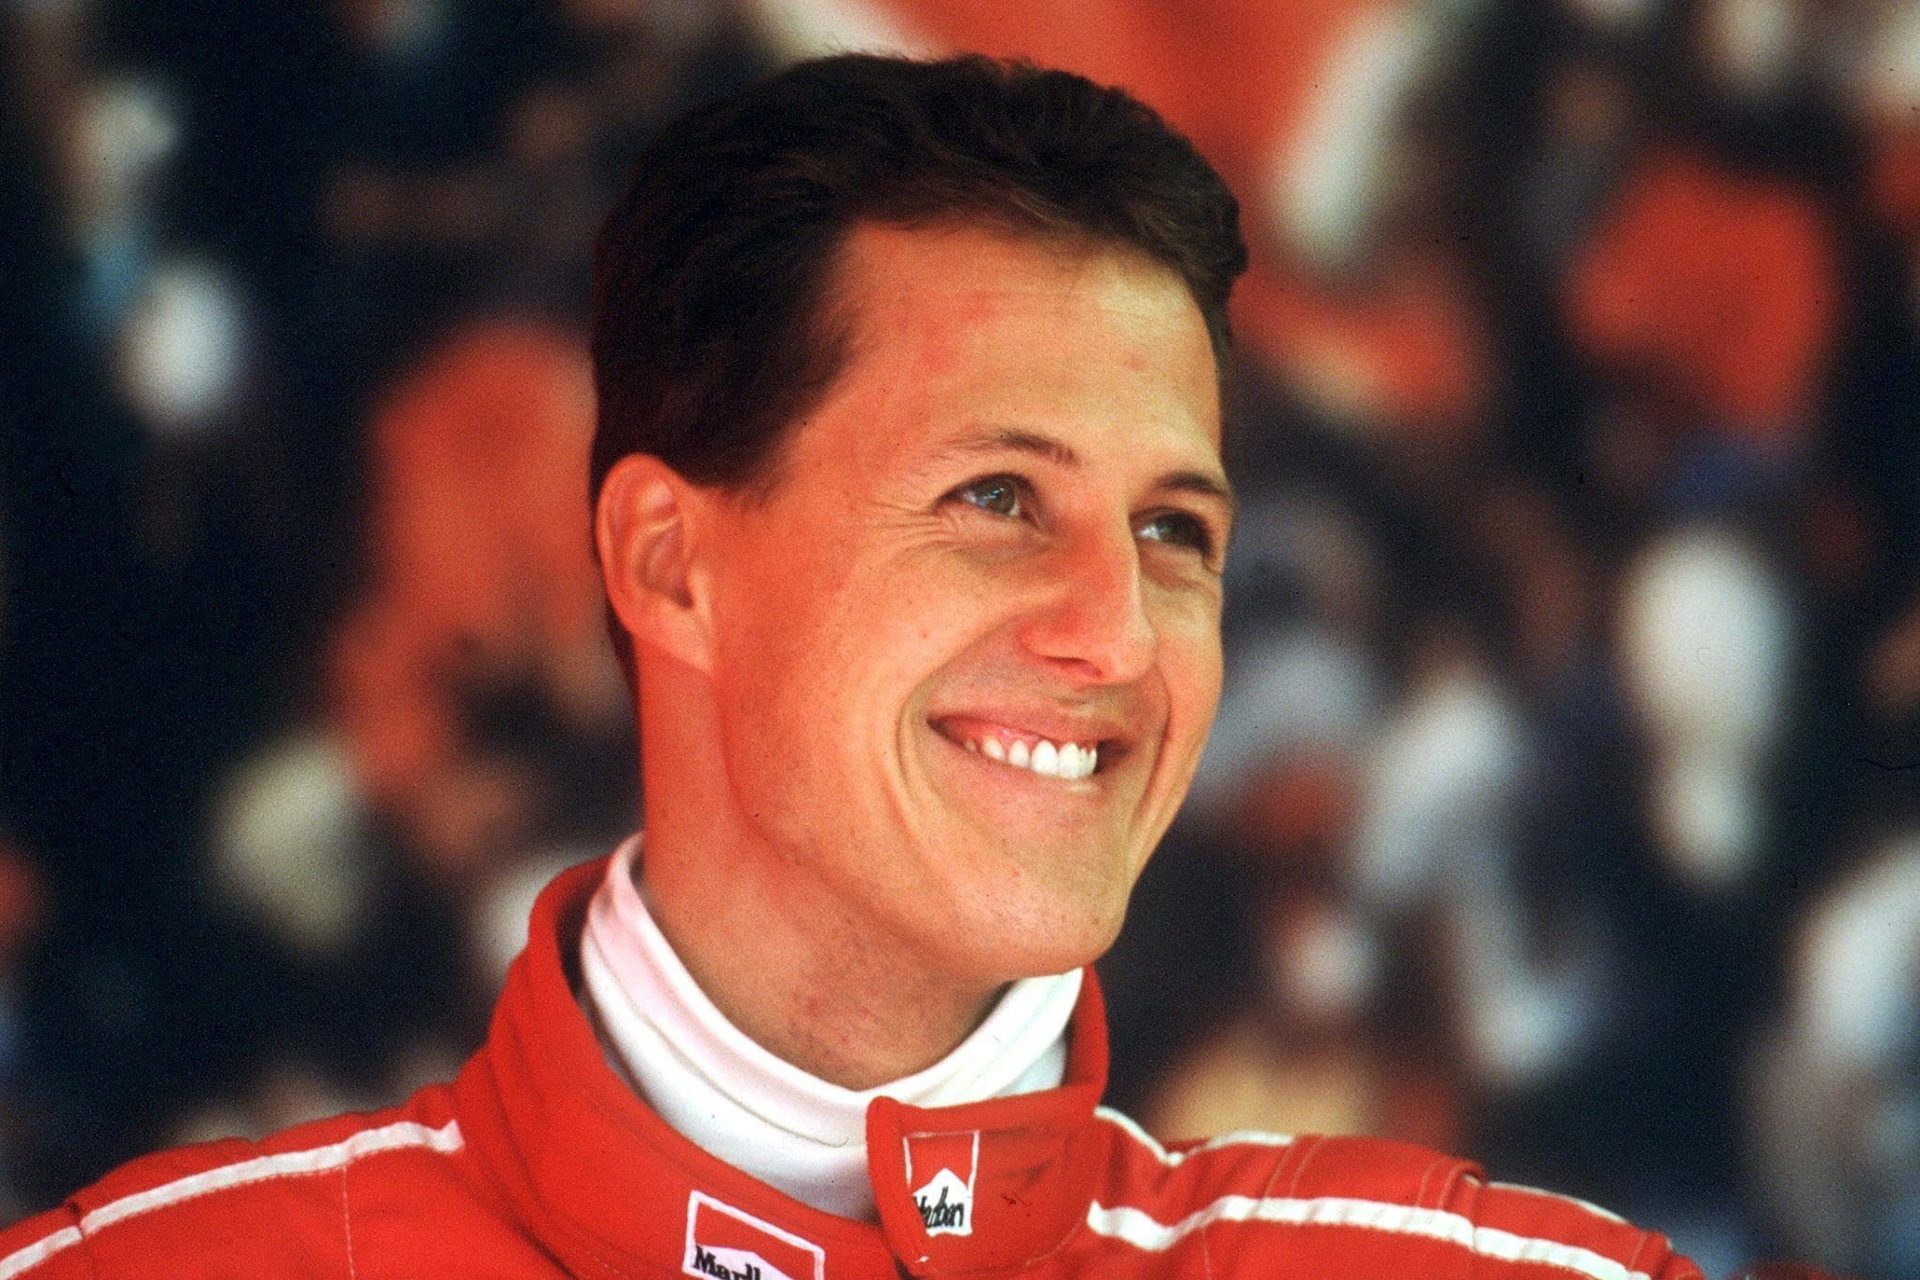 F1 legend Michael Schumacher's current state of health